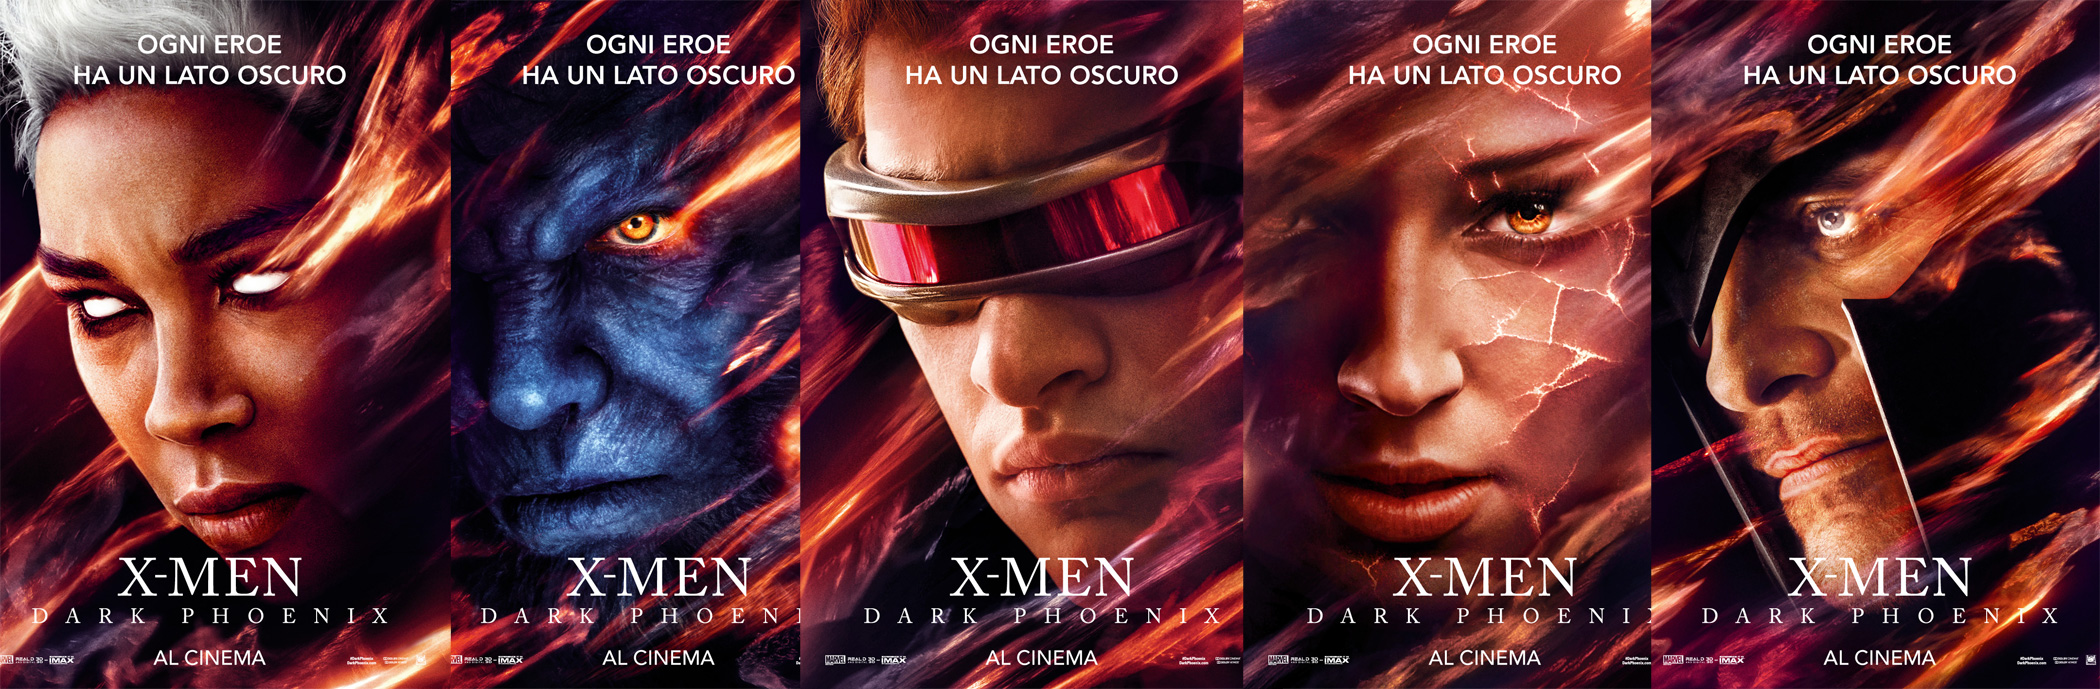 X-Men Dark Phoenix: i Poster italiani dei personaggi